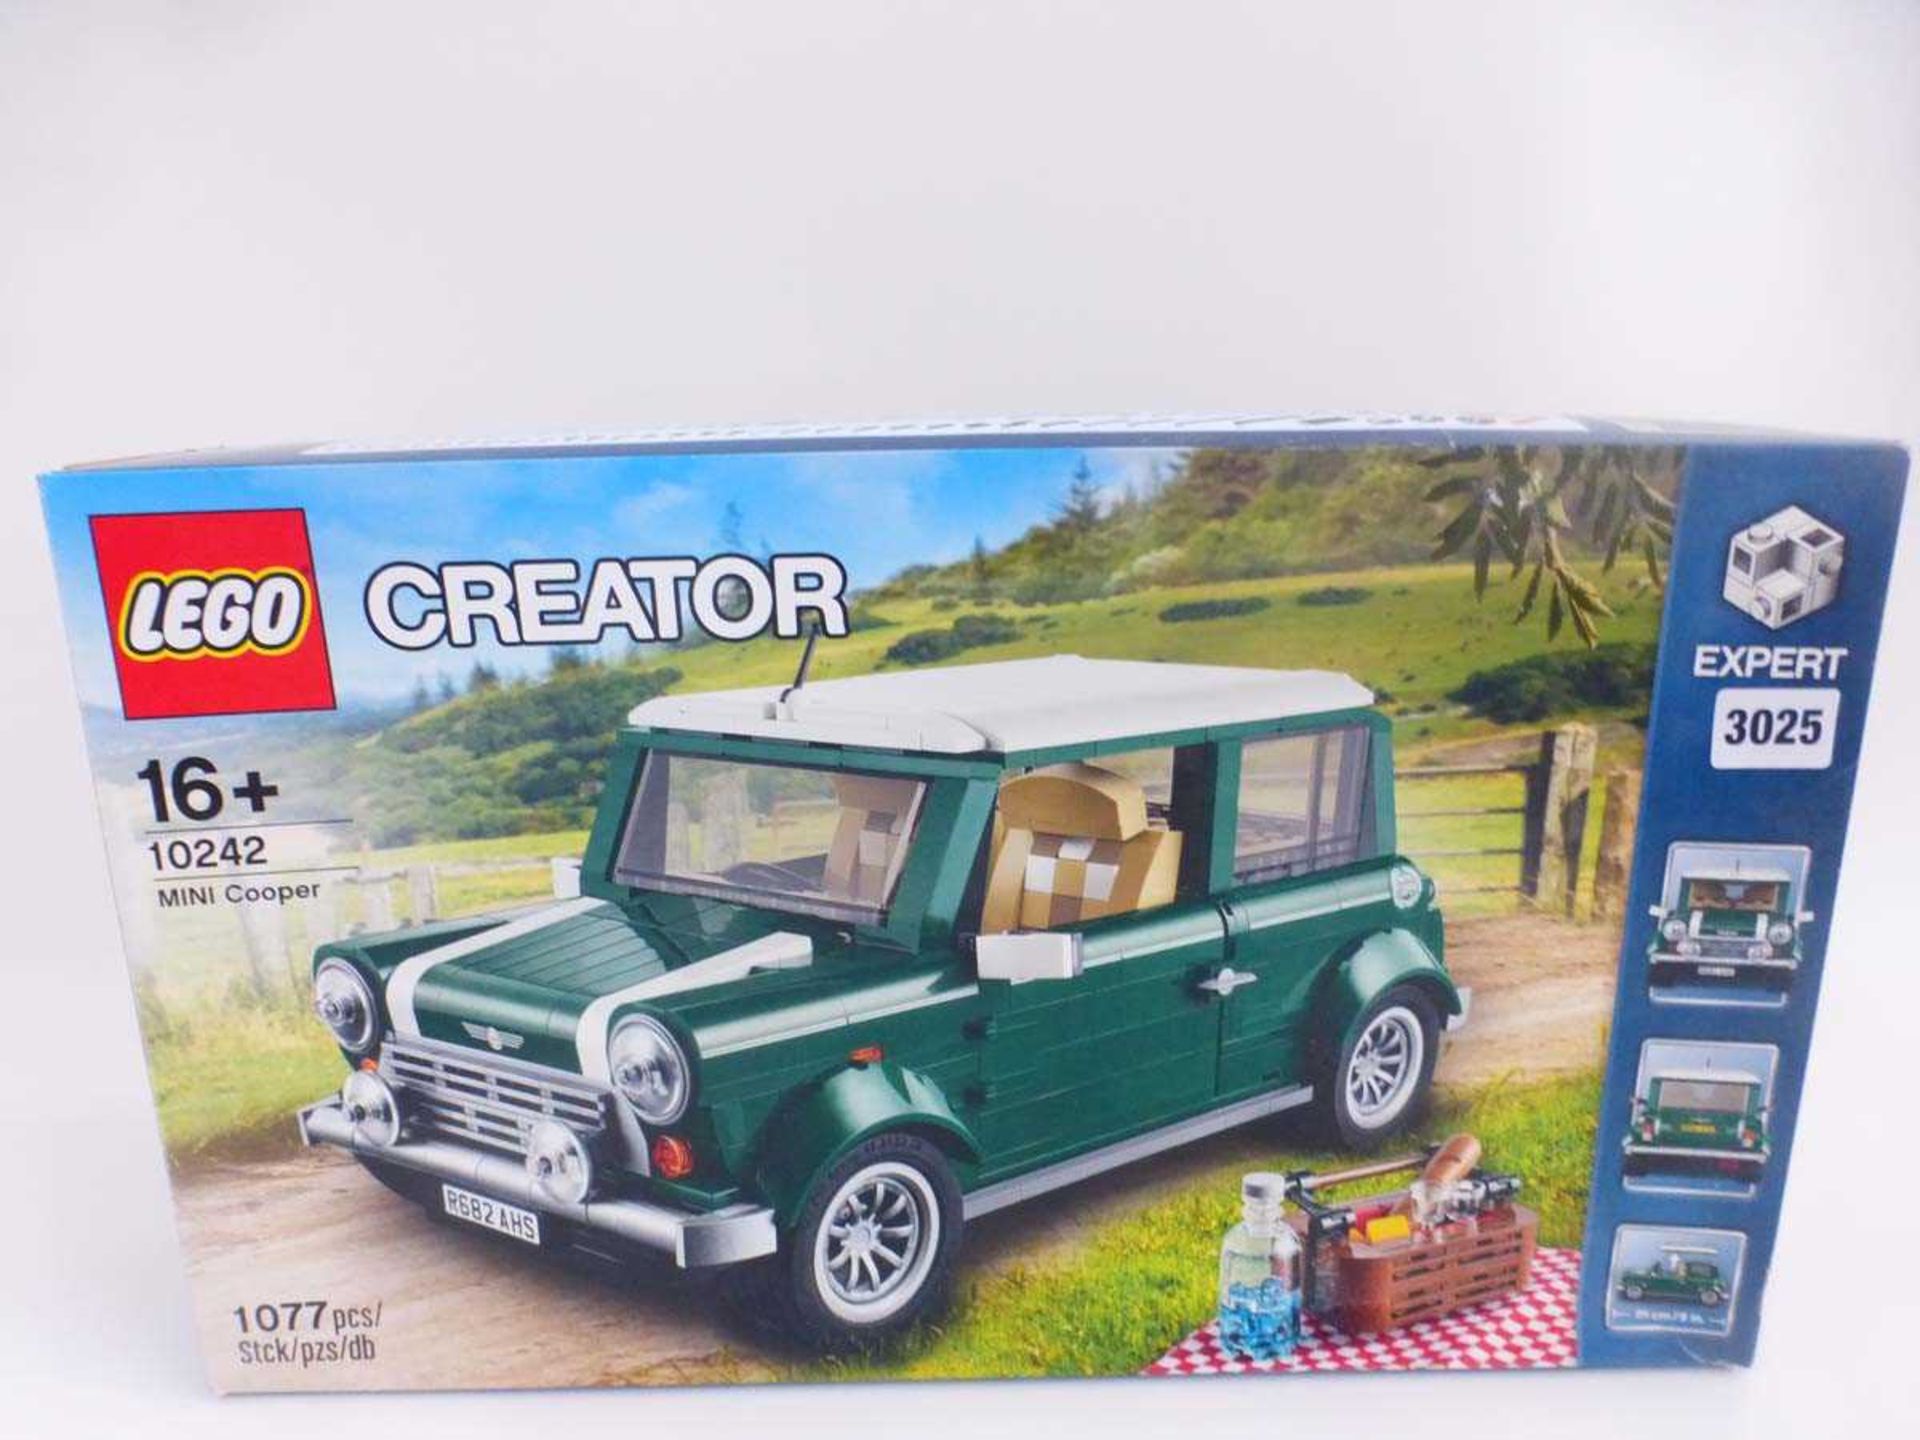 A Lego Creator 10242 Mini Cooper set, boxedContents unchecked